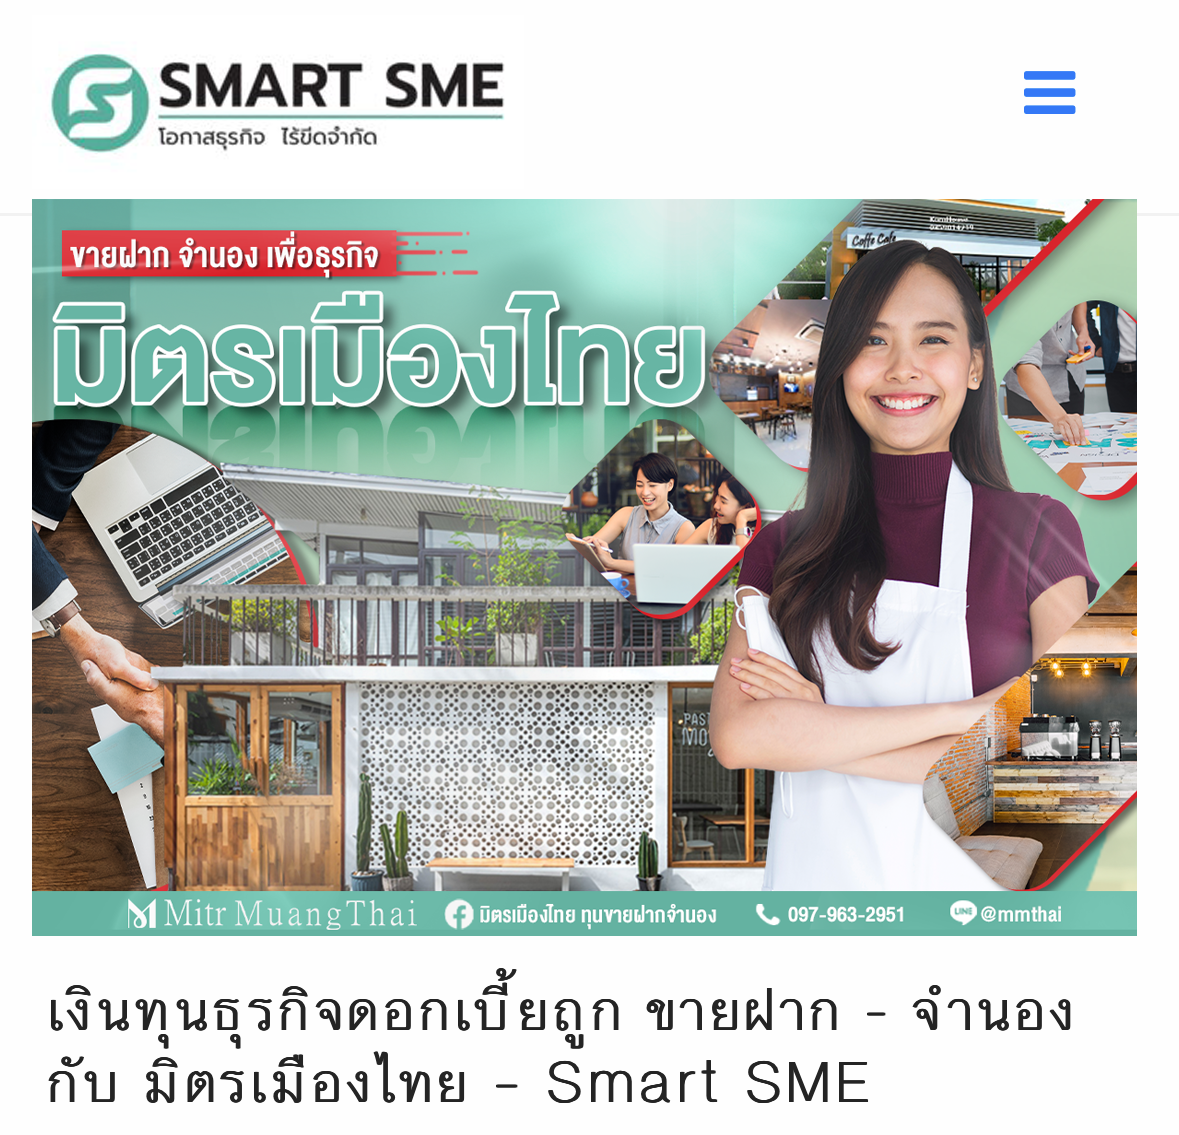 Smart SME มิตรเมืองไทย ขายฝากที่ดิน บ้าน คอนโด ดอกเบี้ยถูก แบบ สมาร์ท เอสเอ็มอี